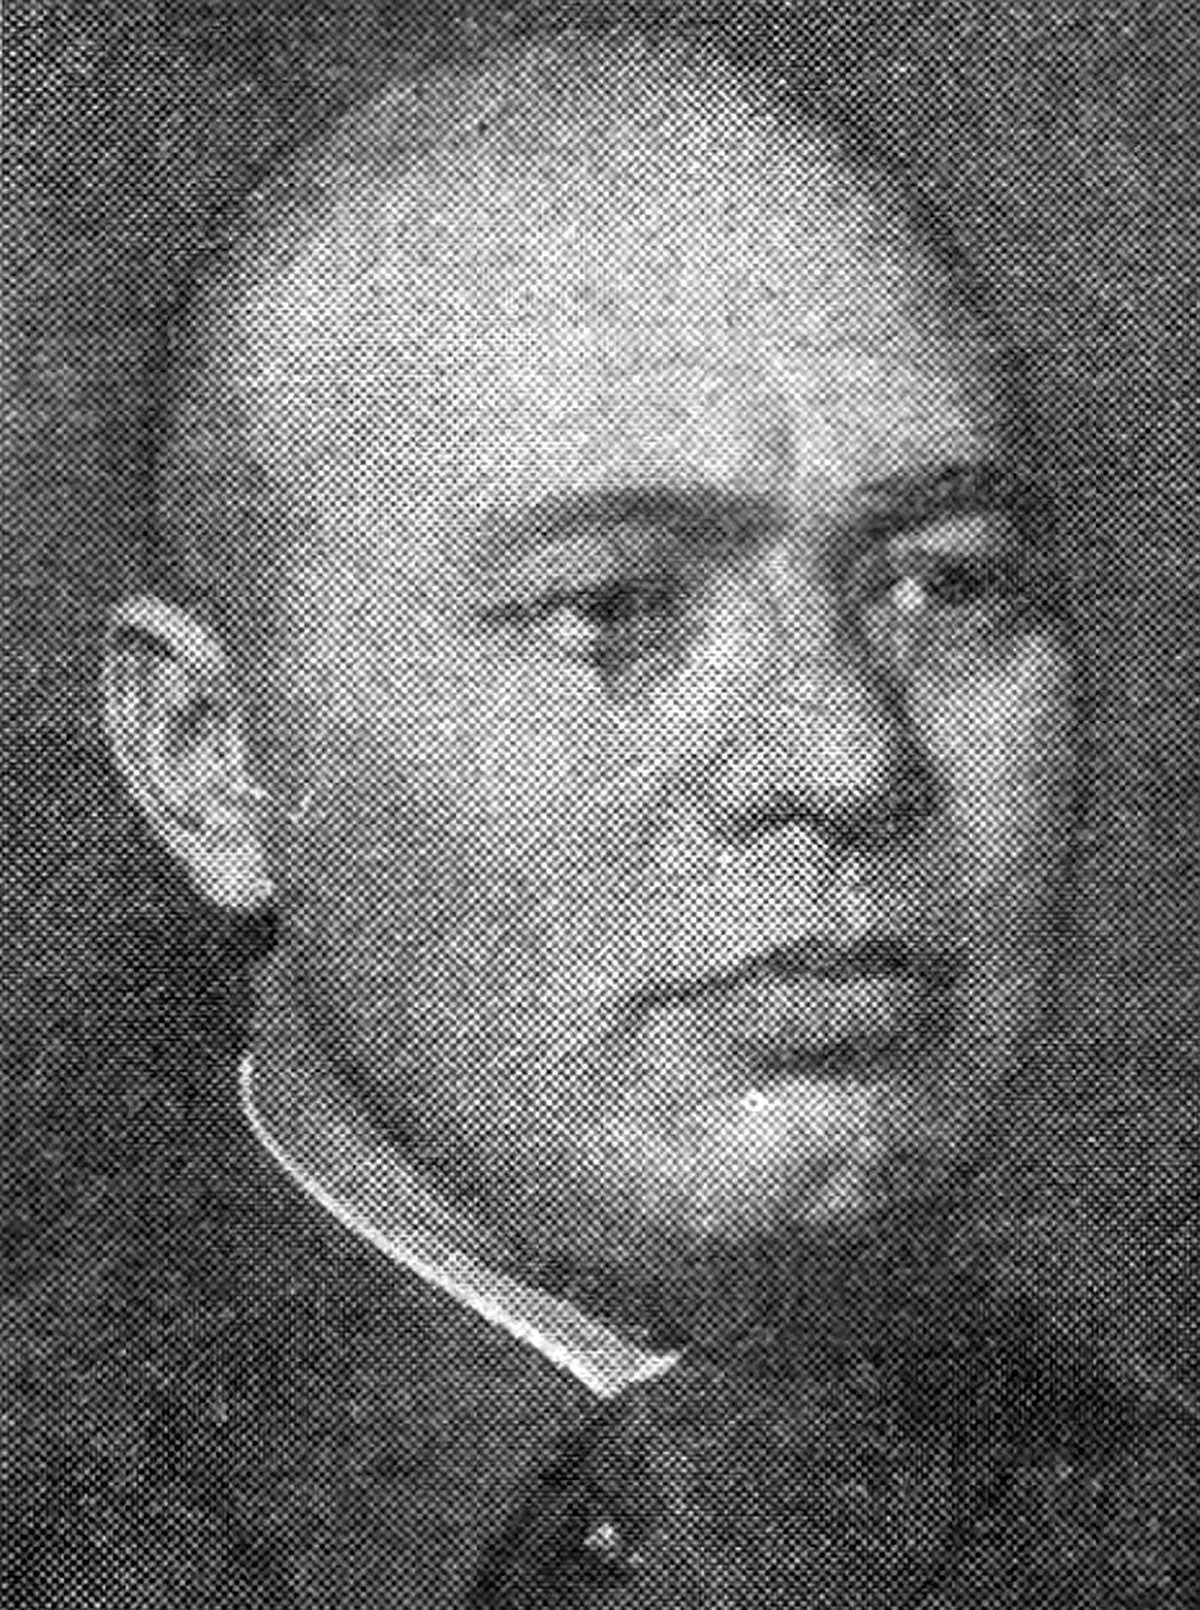 Усман Юсупович Юсупов. Фото: Общественное достояние / Wikimedia